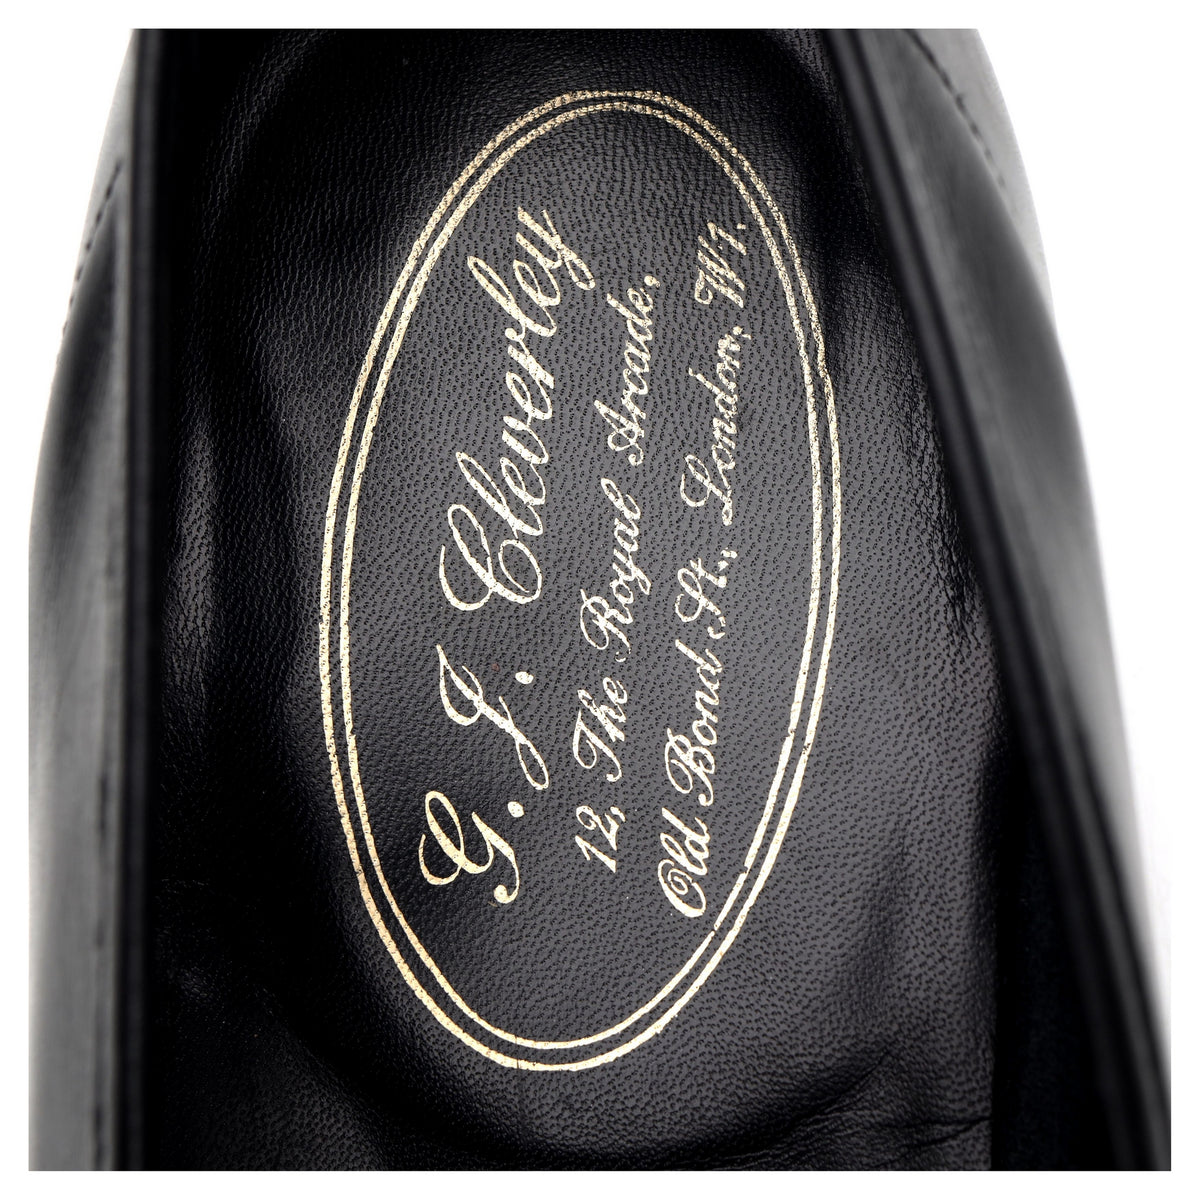 &#39;Owen&#39; Black Leather Loafers UK 10.5 E